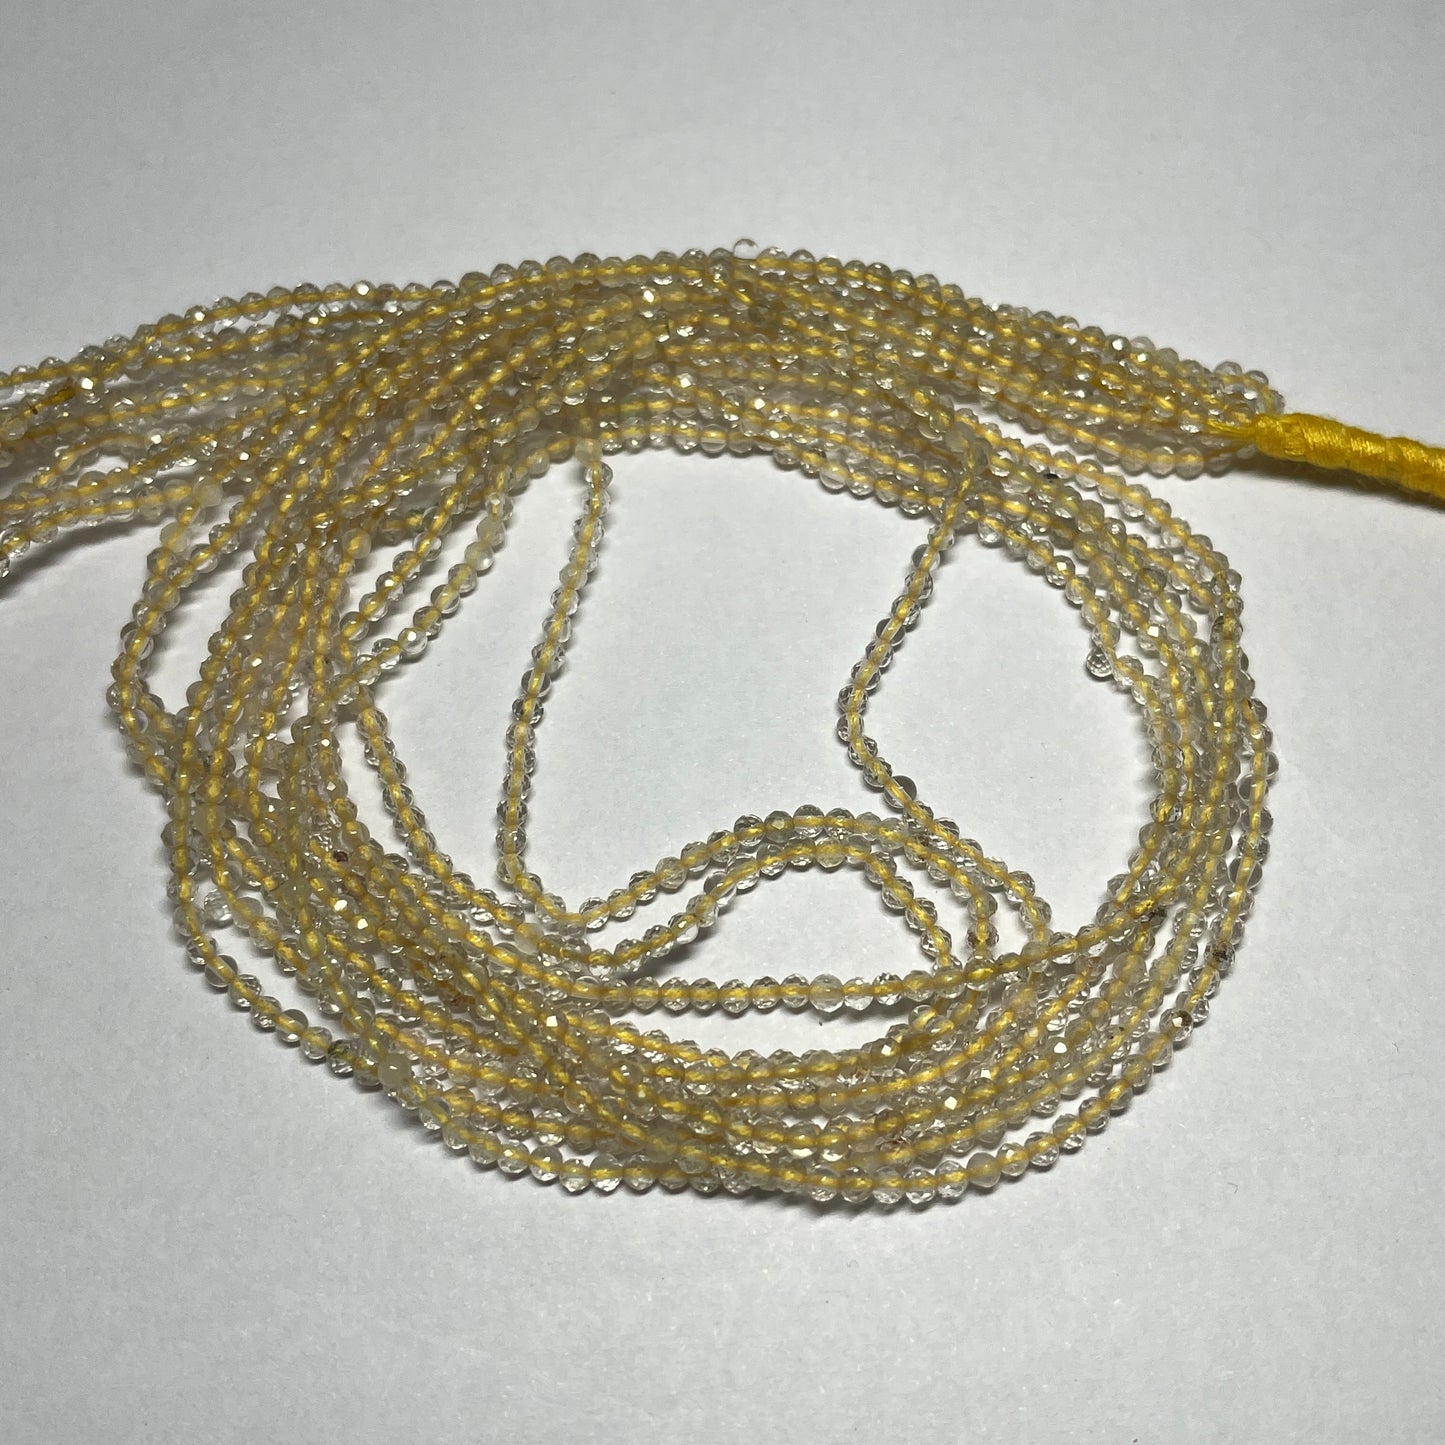 Natural Golden Rutile Faceted Cut Bead